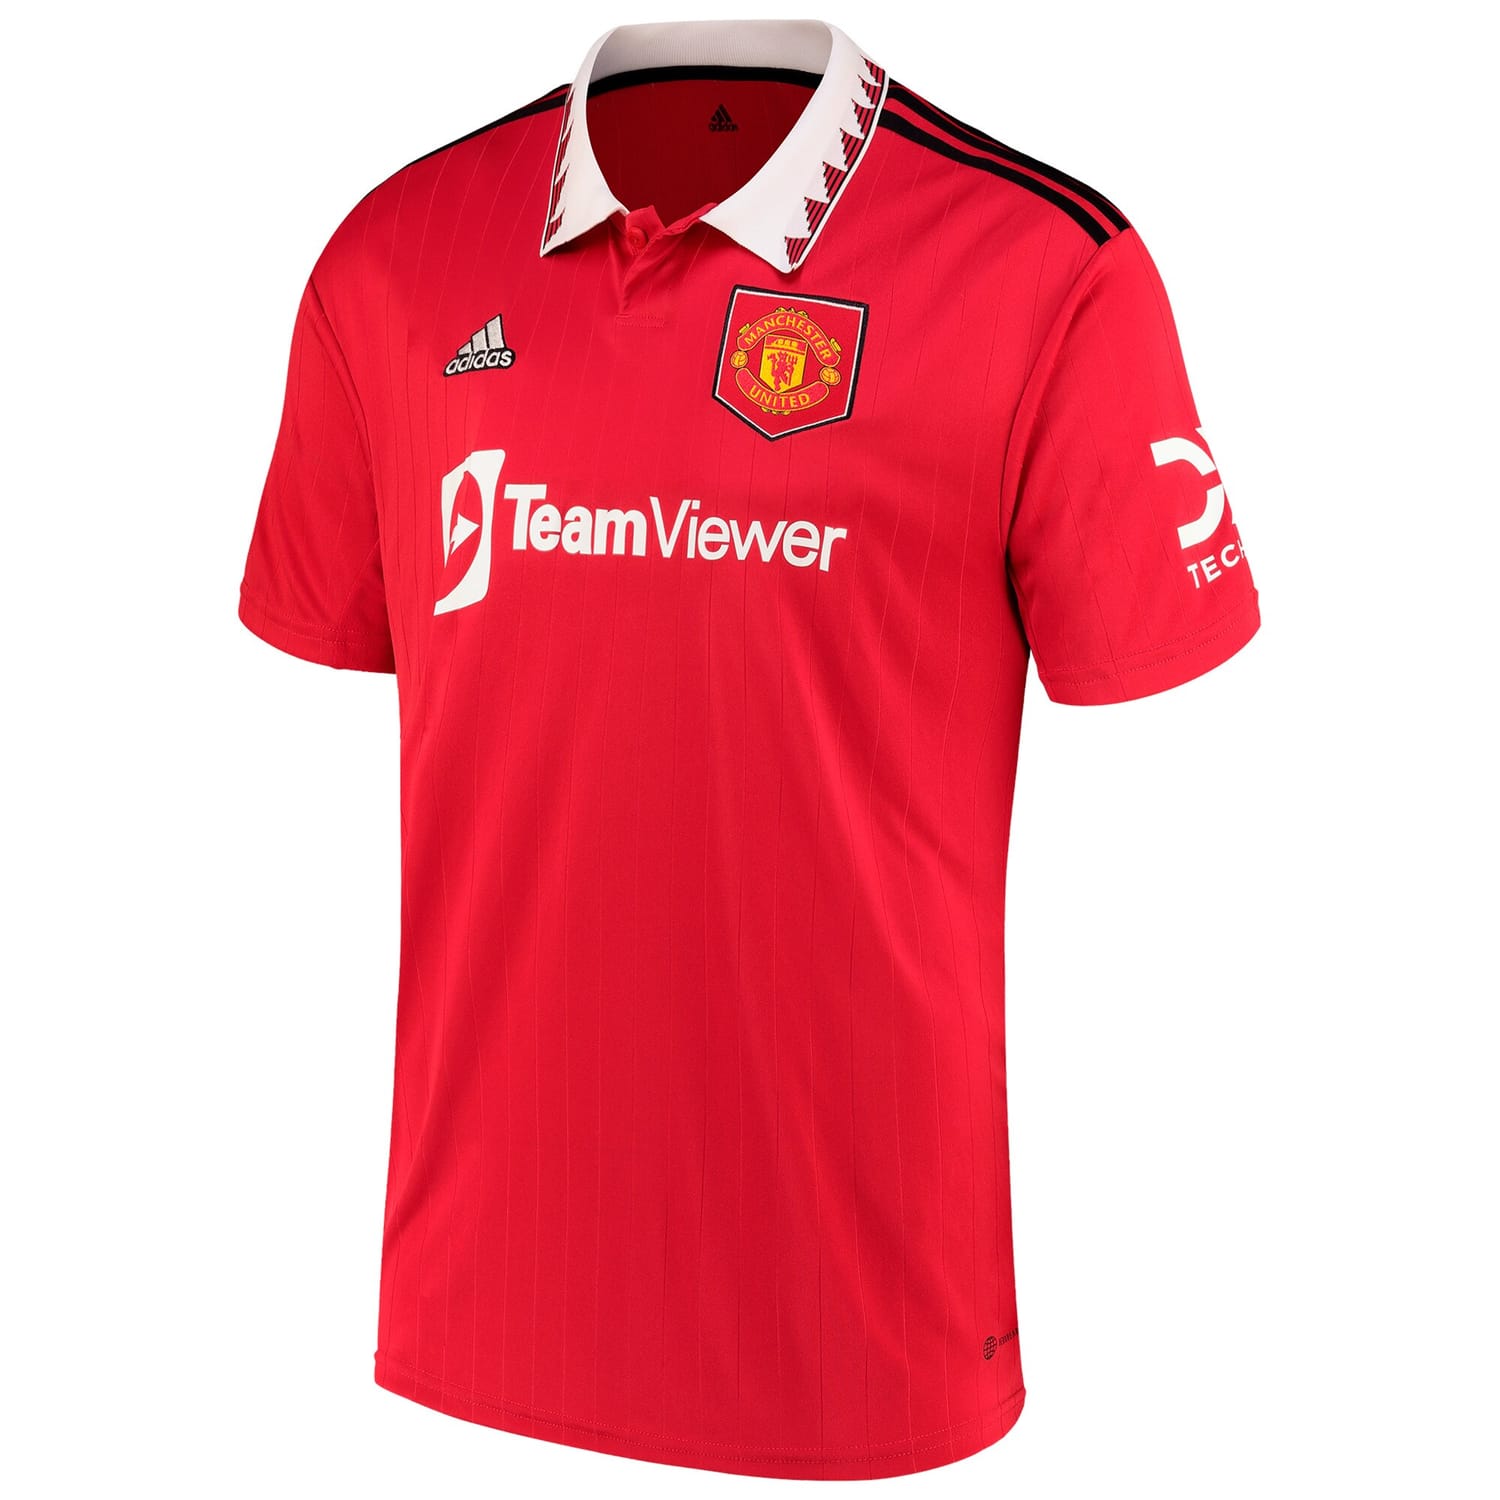 Premier League Manchester United Home Jersey Shirt 2022-23 player Marcel Sabitzer 15 printing for Men